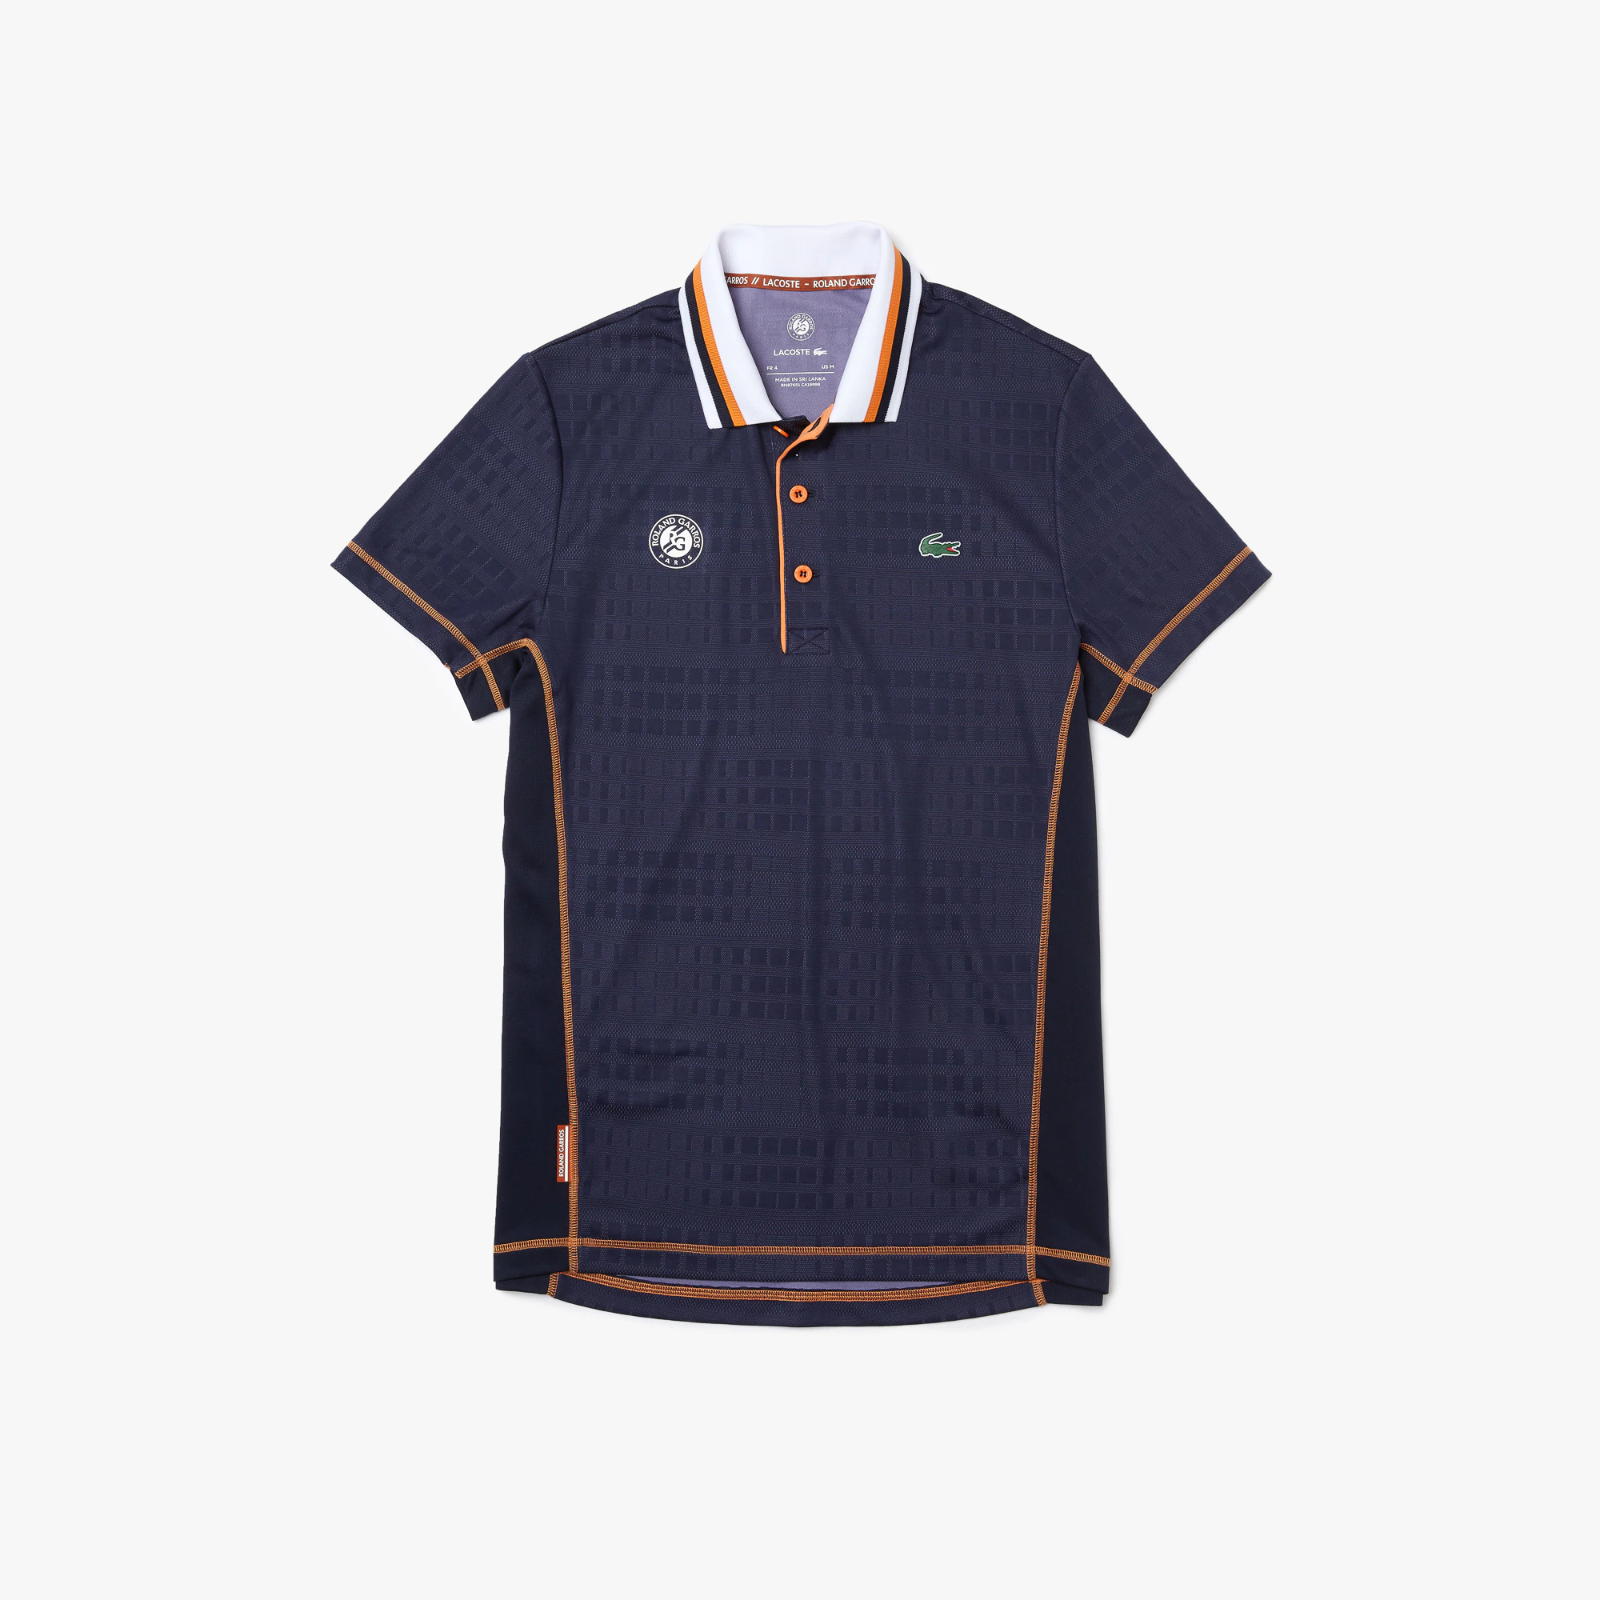 Men&#039;s Lacoste SPORT Roland Garros Edition Breathable Polo DH0966-51